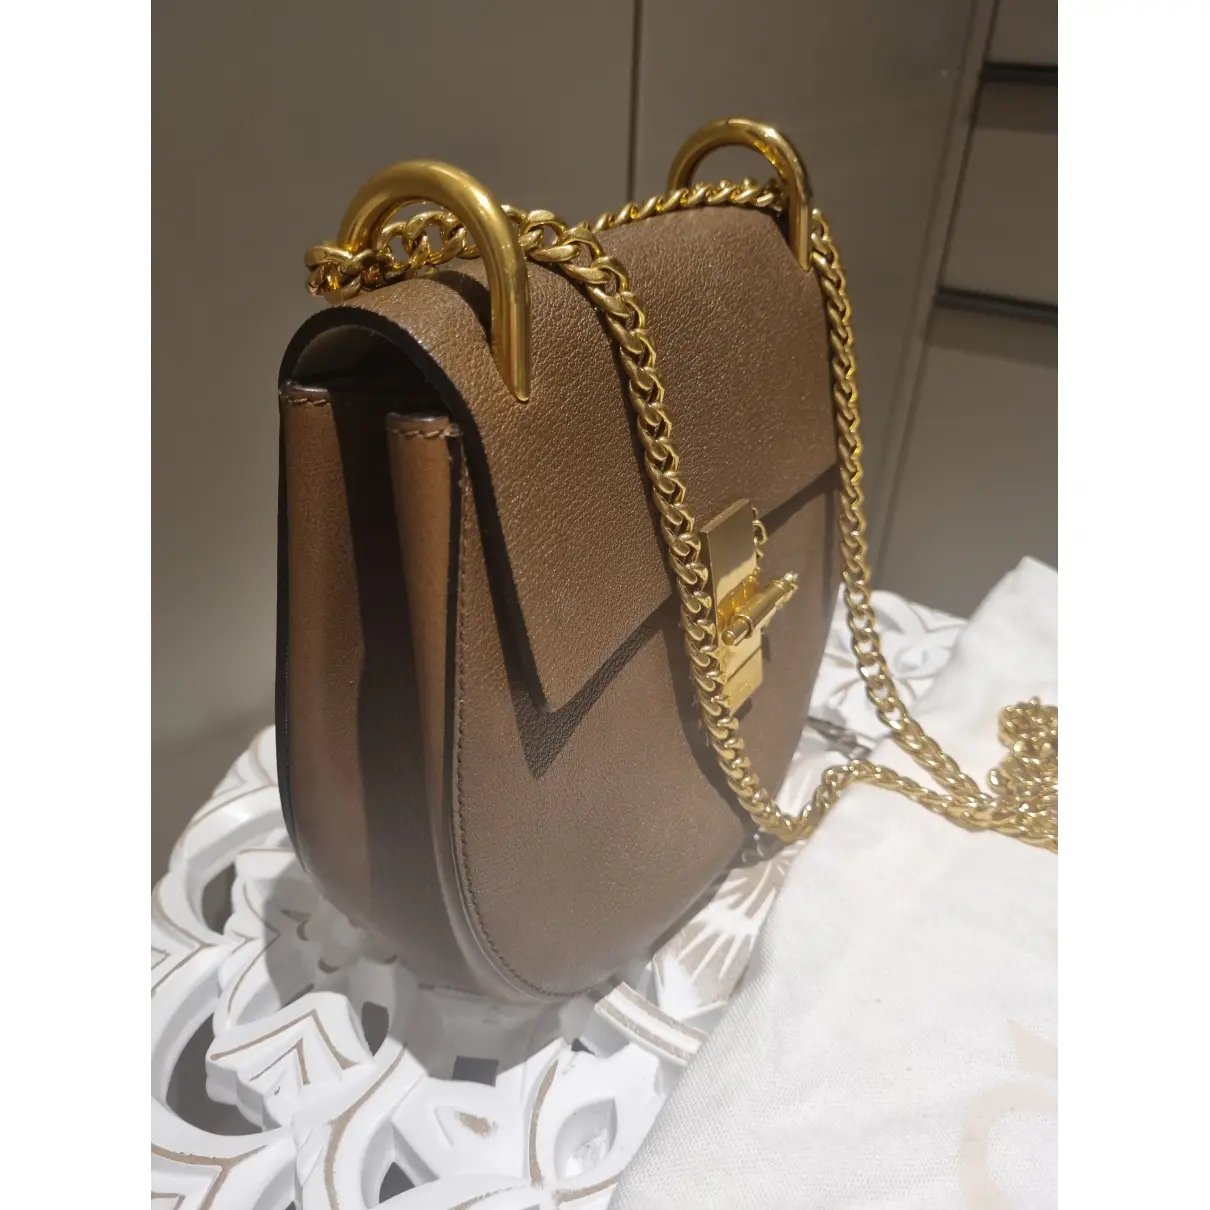 Buy Chloé Drew leather crossbody bag online